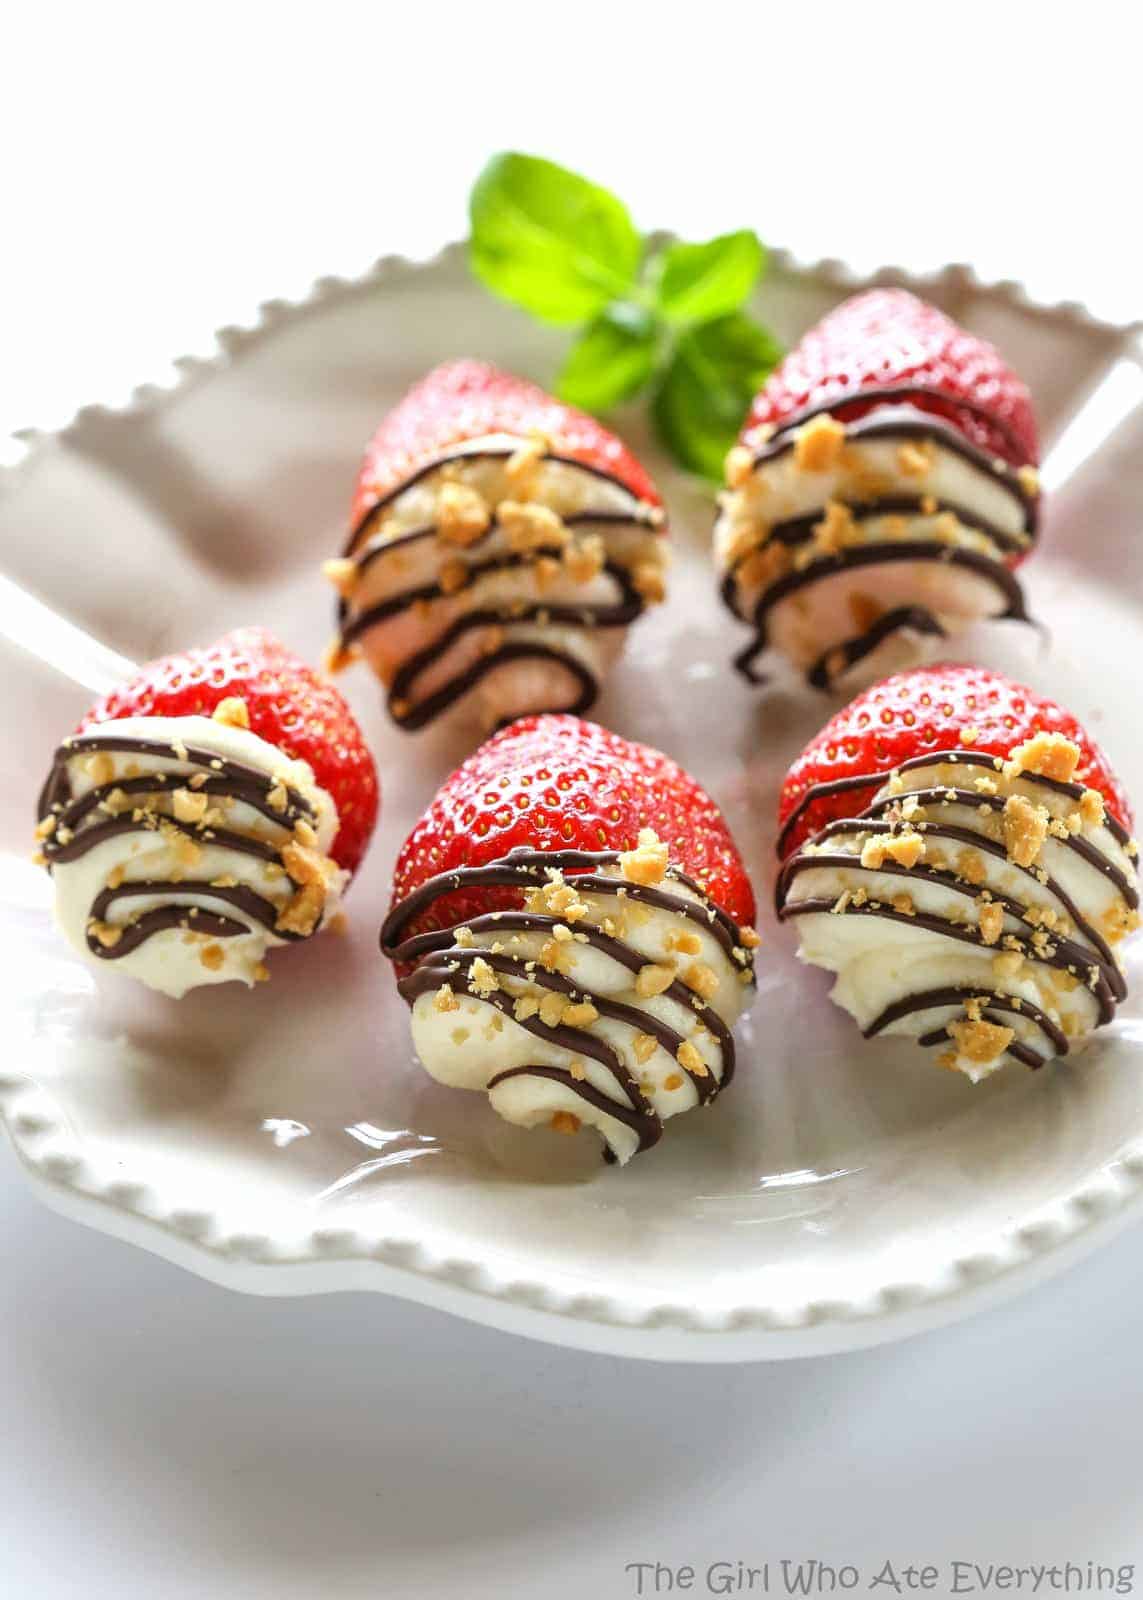 fb image - Mascarpone Stuffed Strawberries